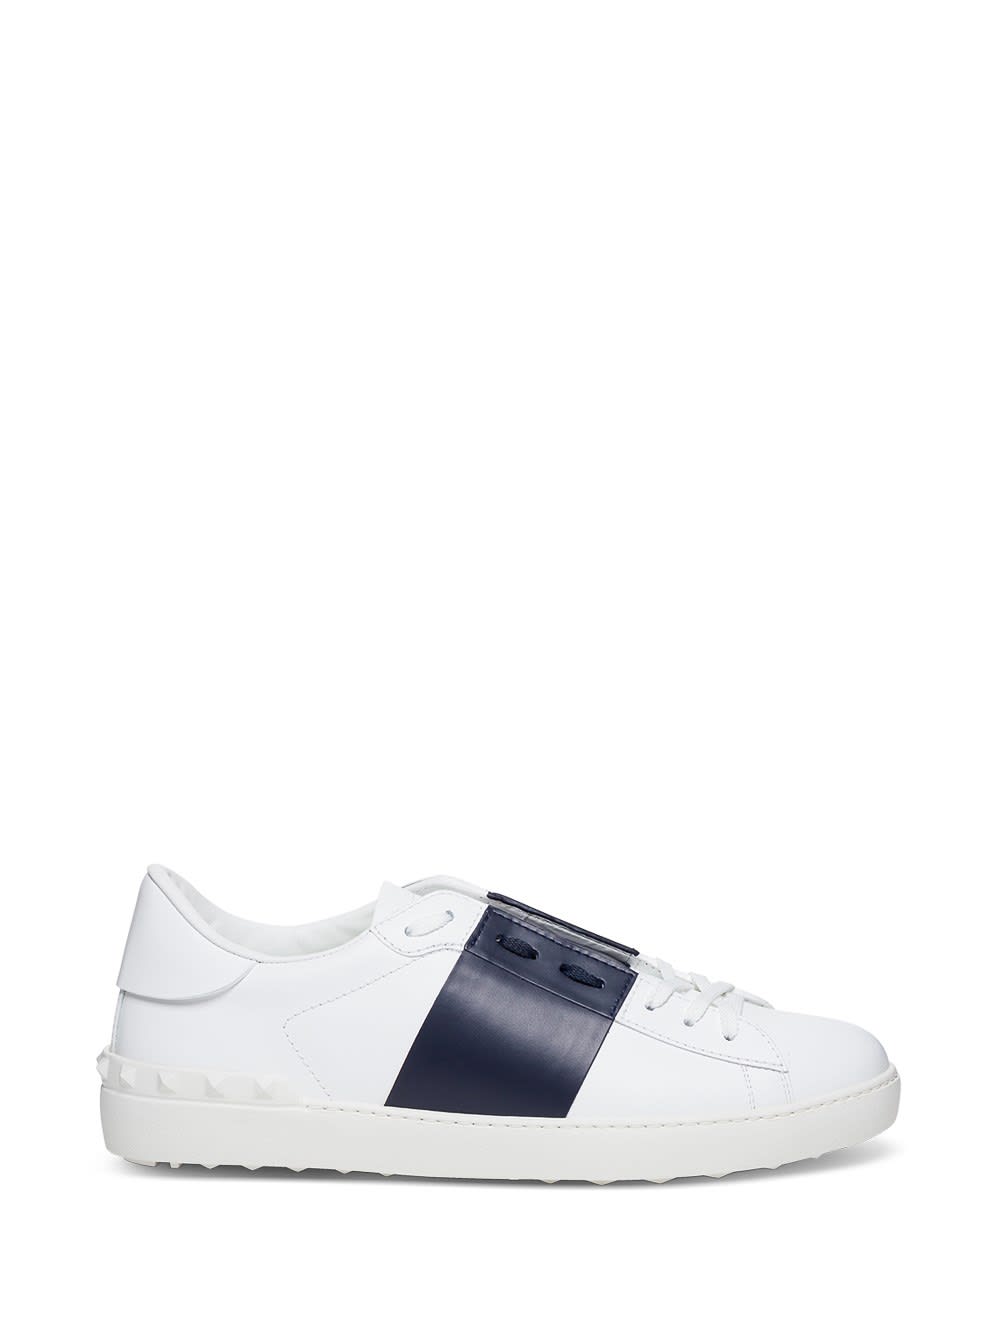 Valentino Garavani Open Sneakers In White And Blue Leather